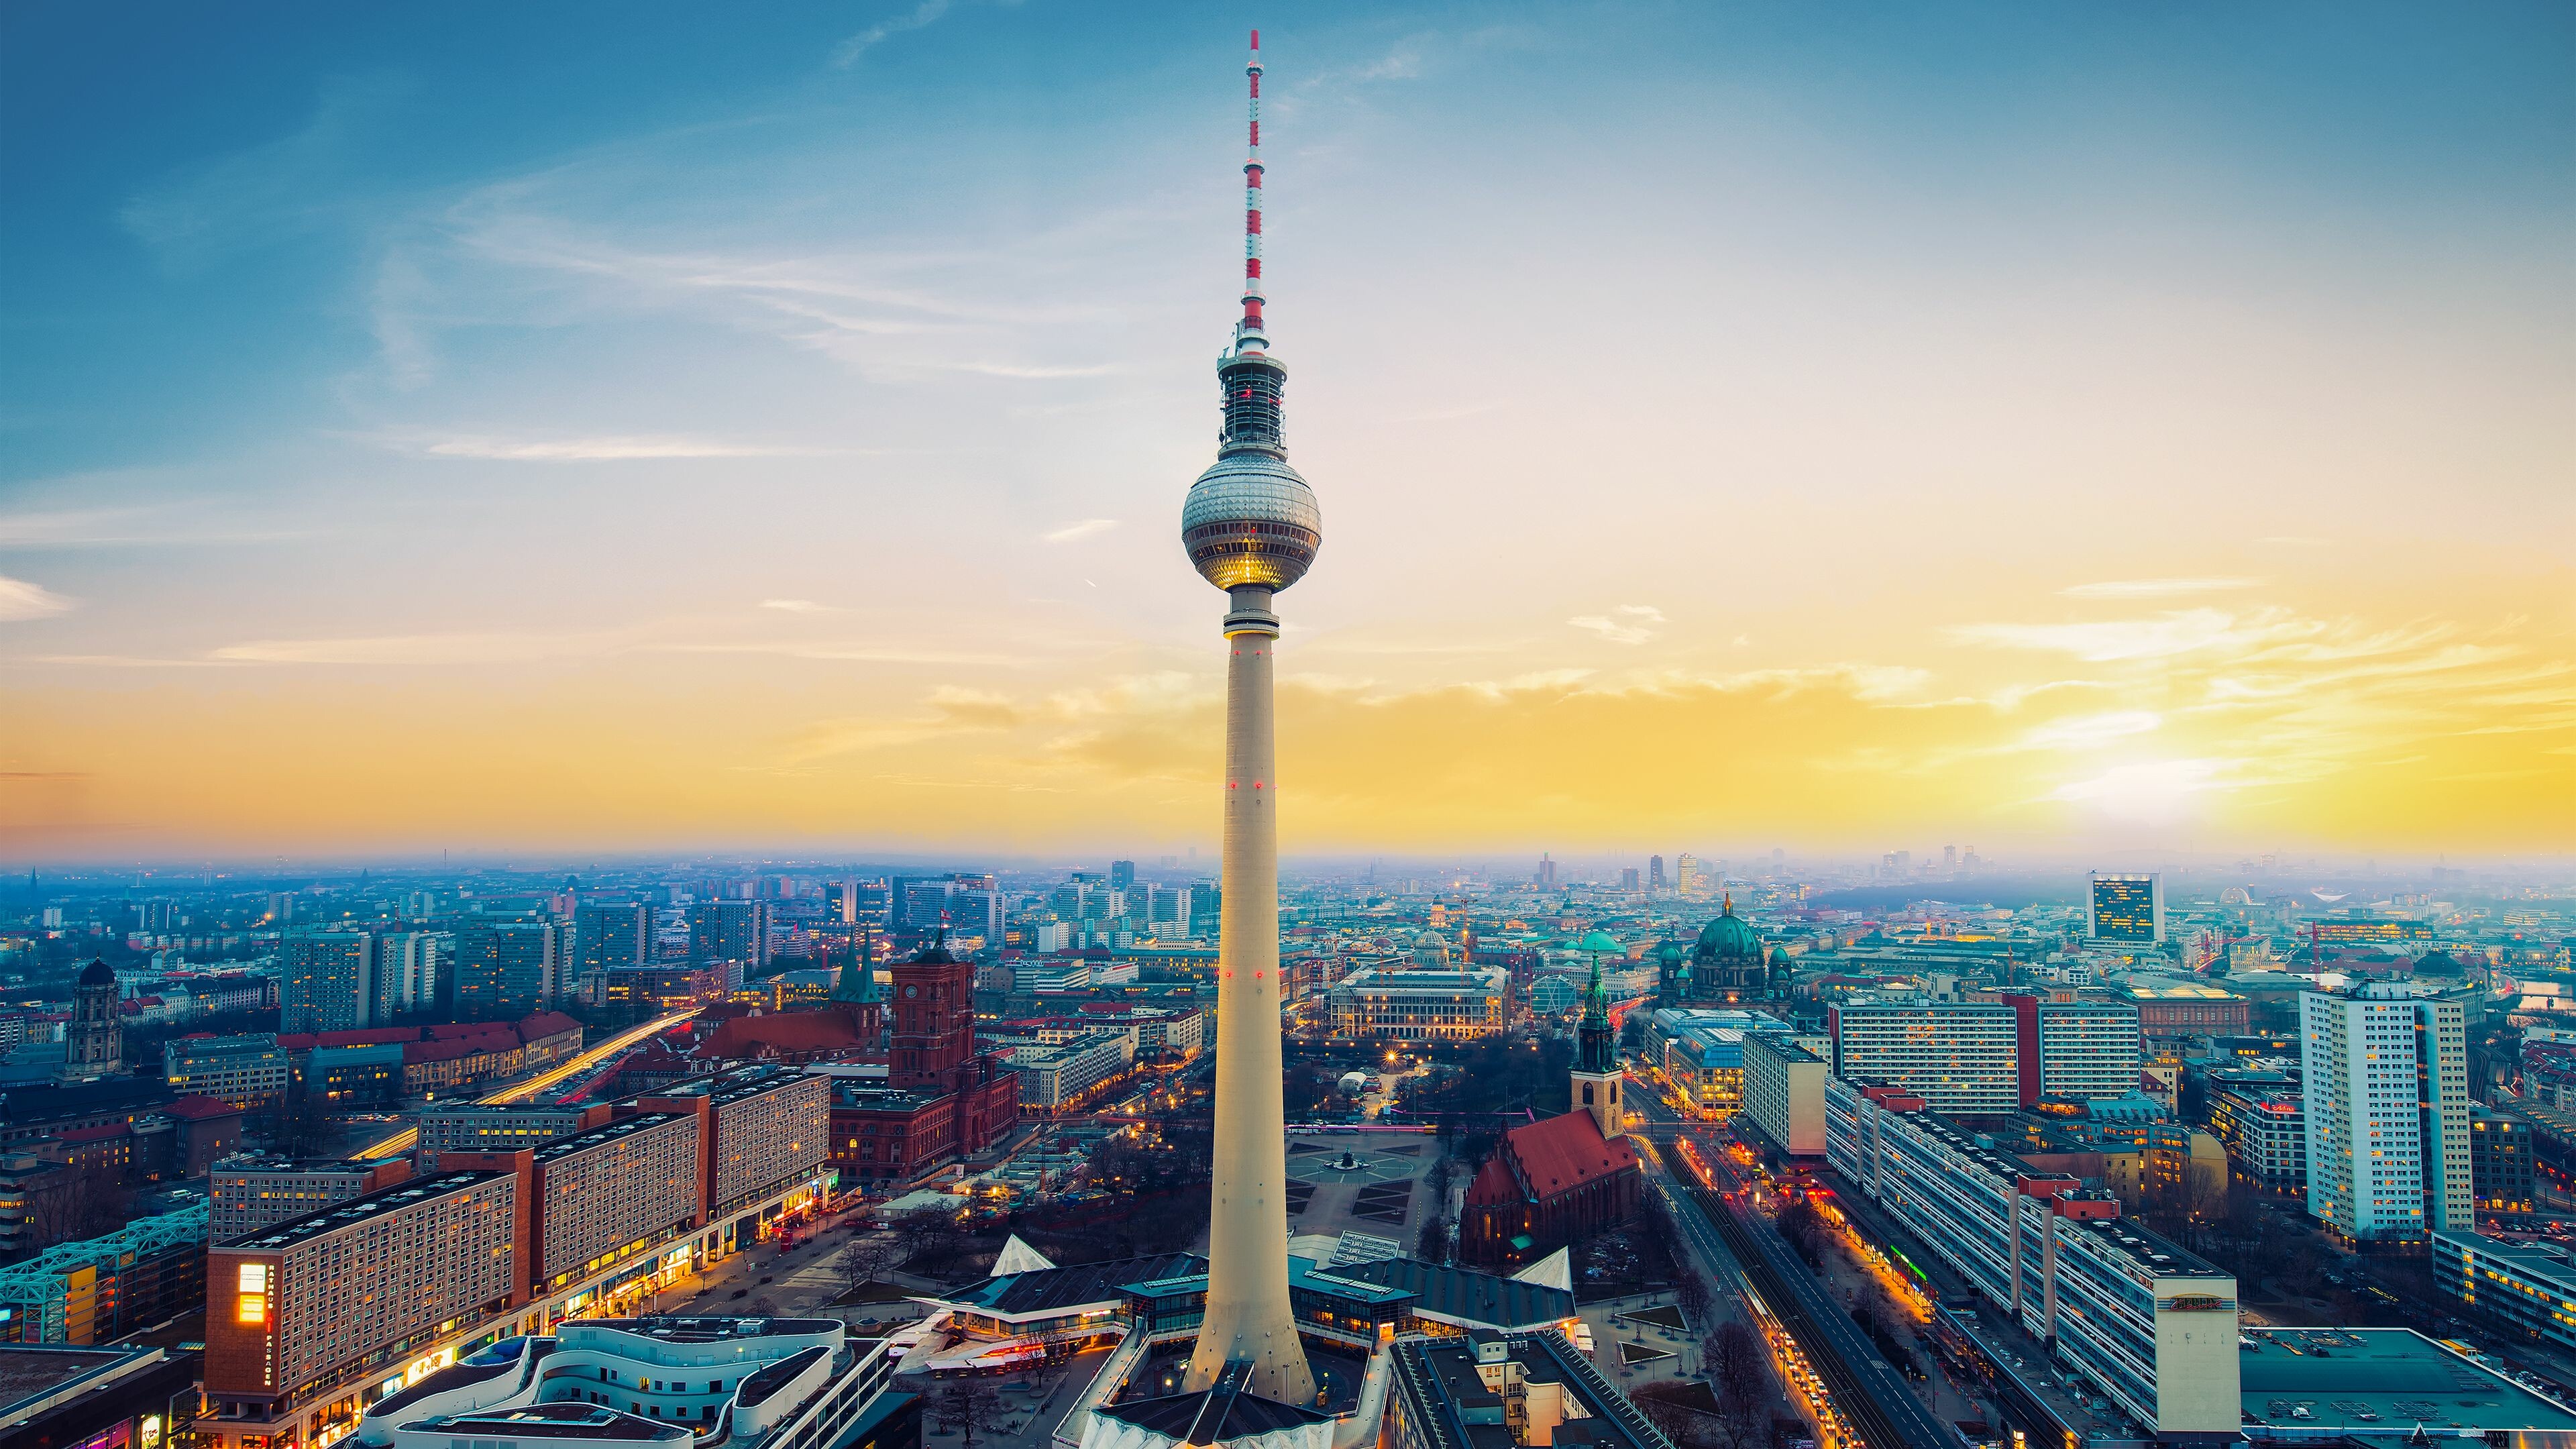 Berlin 4K phone wallpapers, Top free backgrounds, Modern metropolis, Urban culture, 3840x2160 4K Desktop